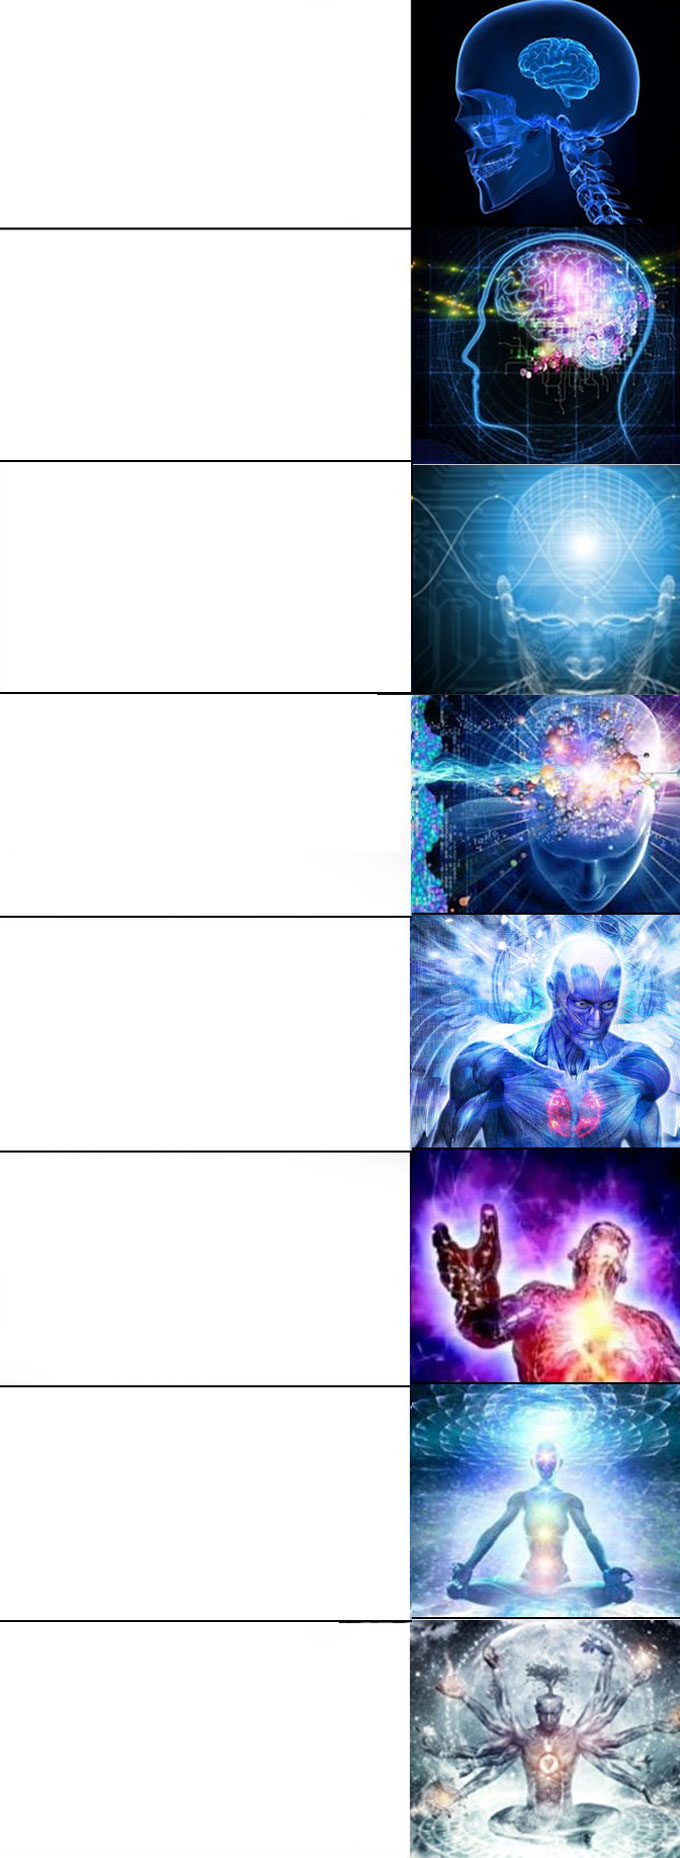 High Quality expanding brain (tall) Blank Meme Template